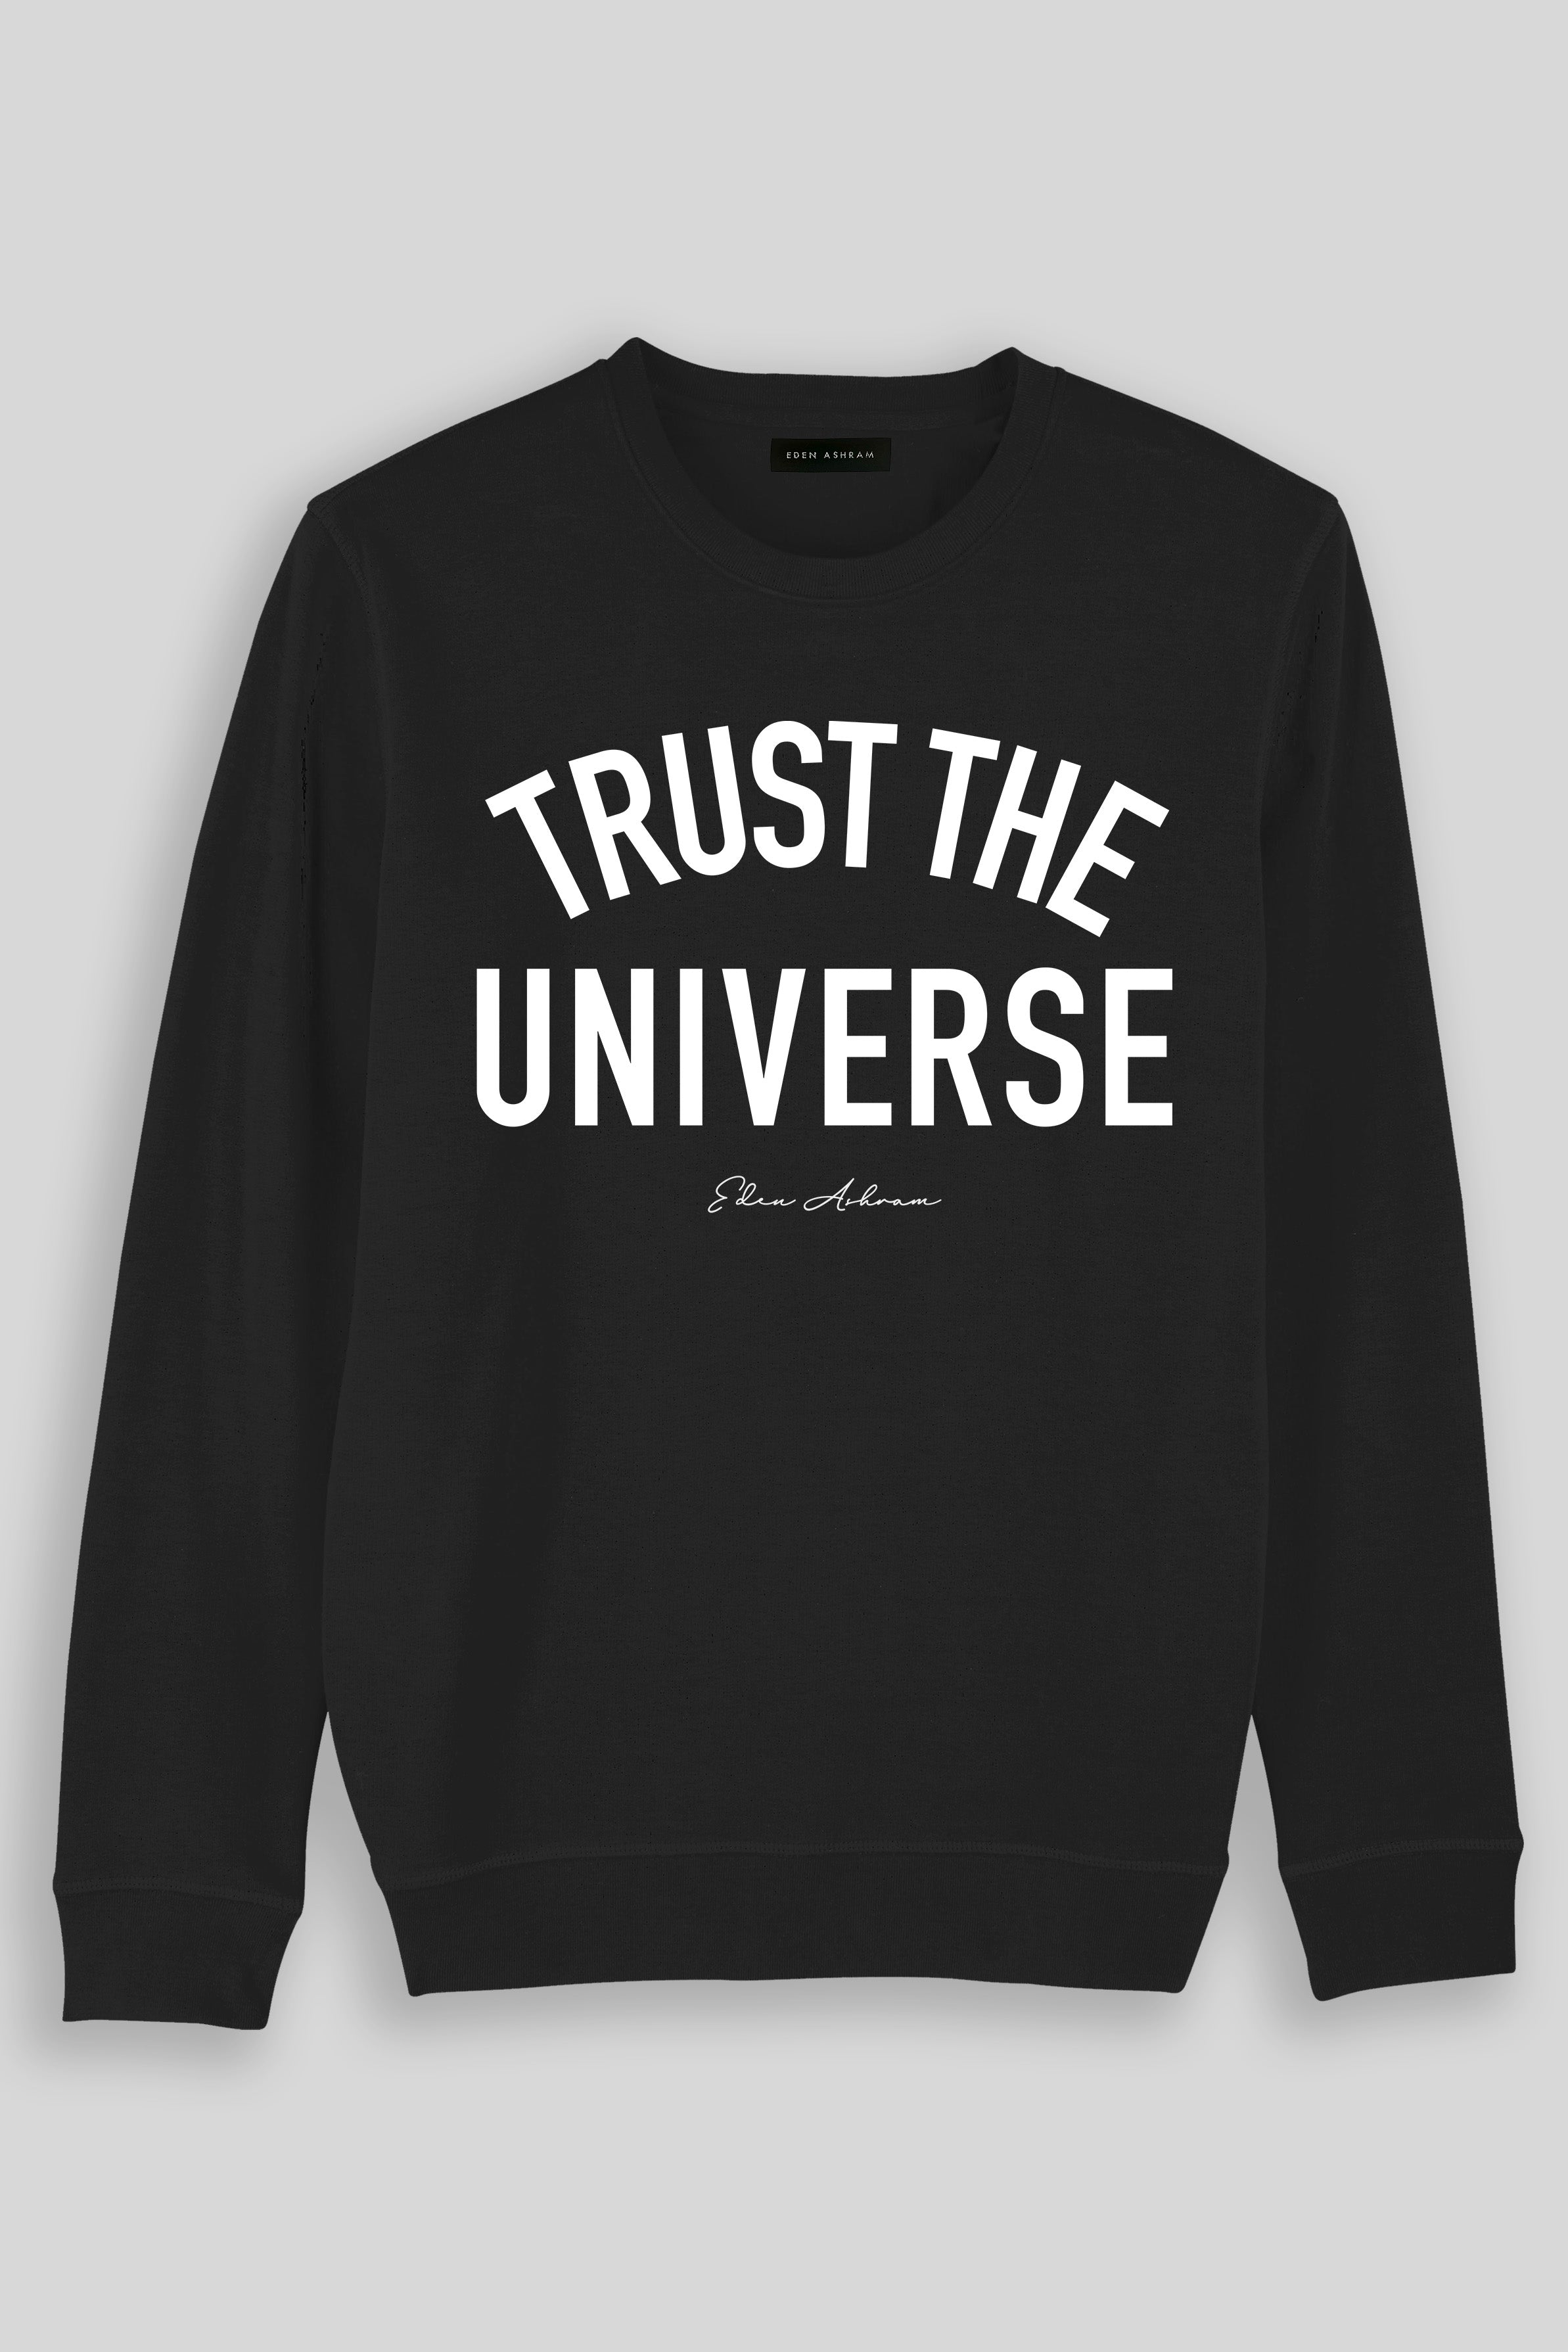 EDEN ASHRAM Trust The Universe Premium Crew Neck Sweatshirt Vintage Black